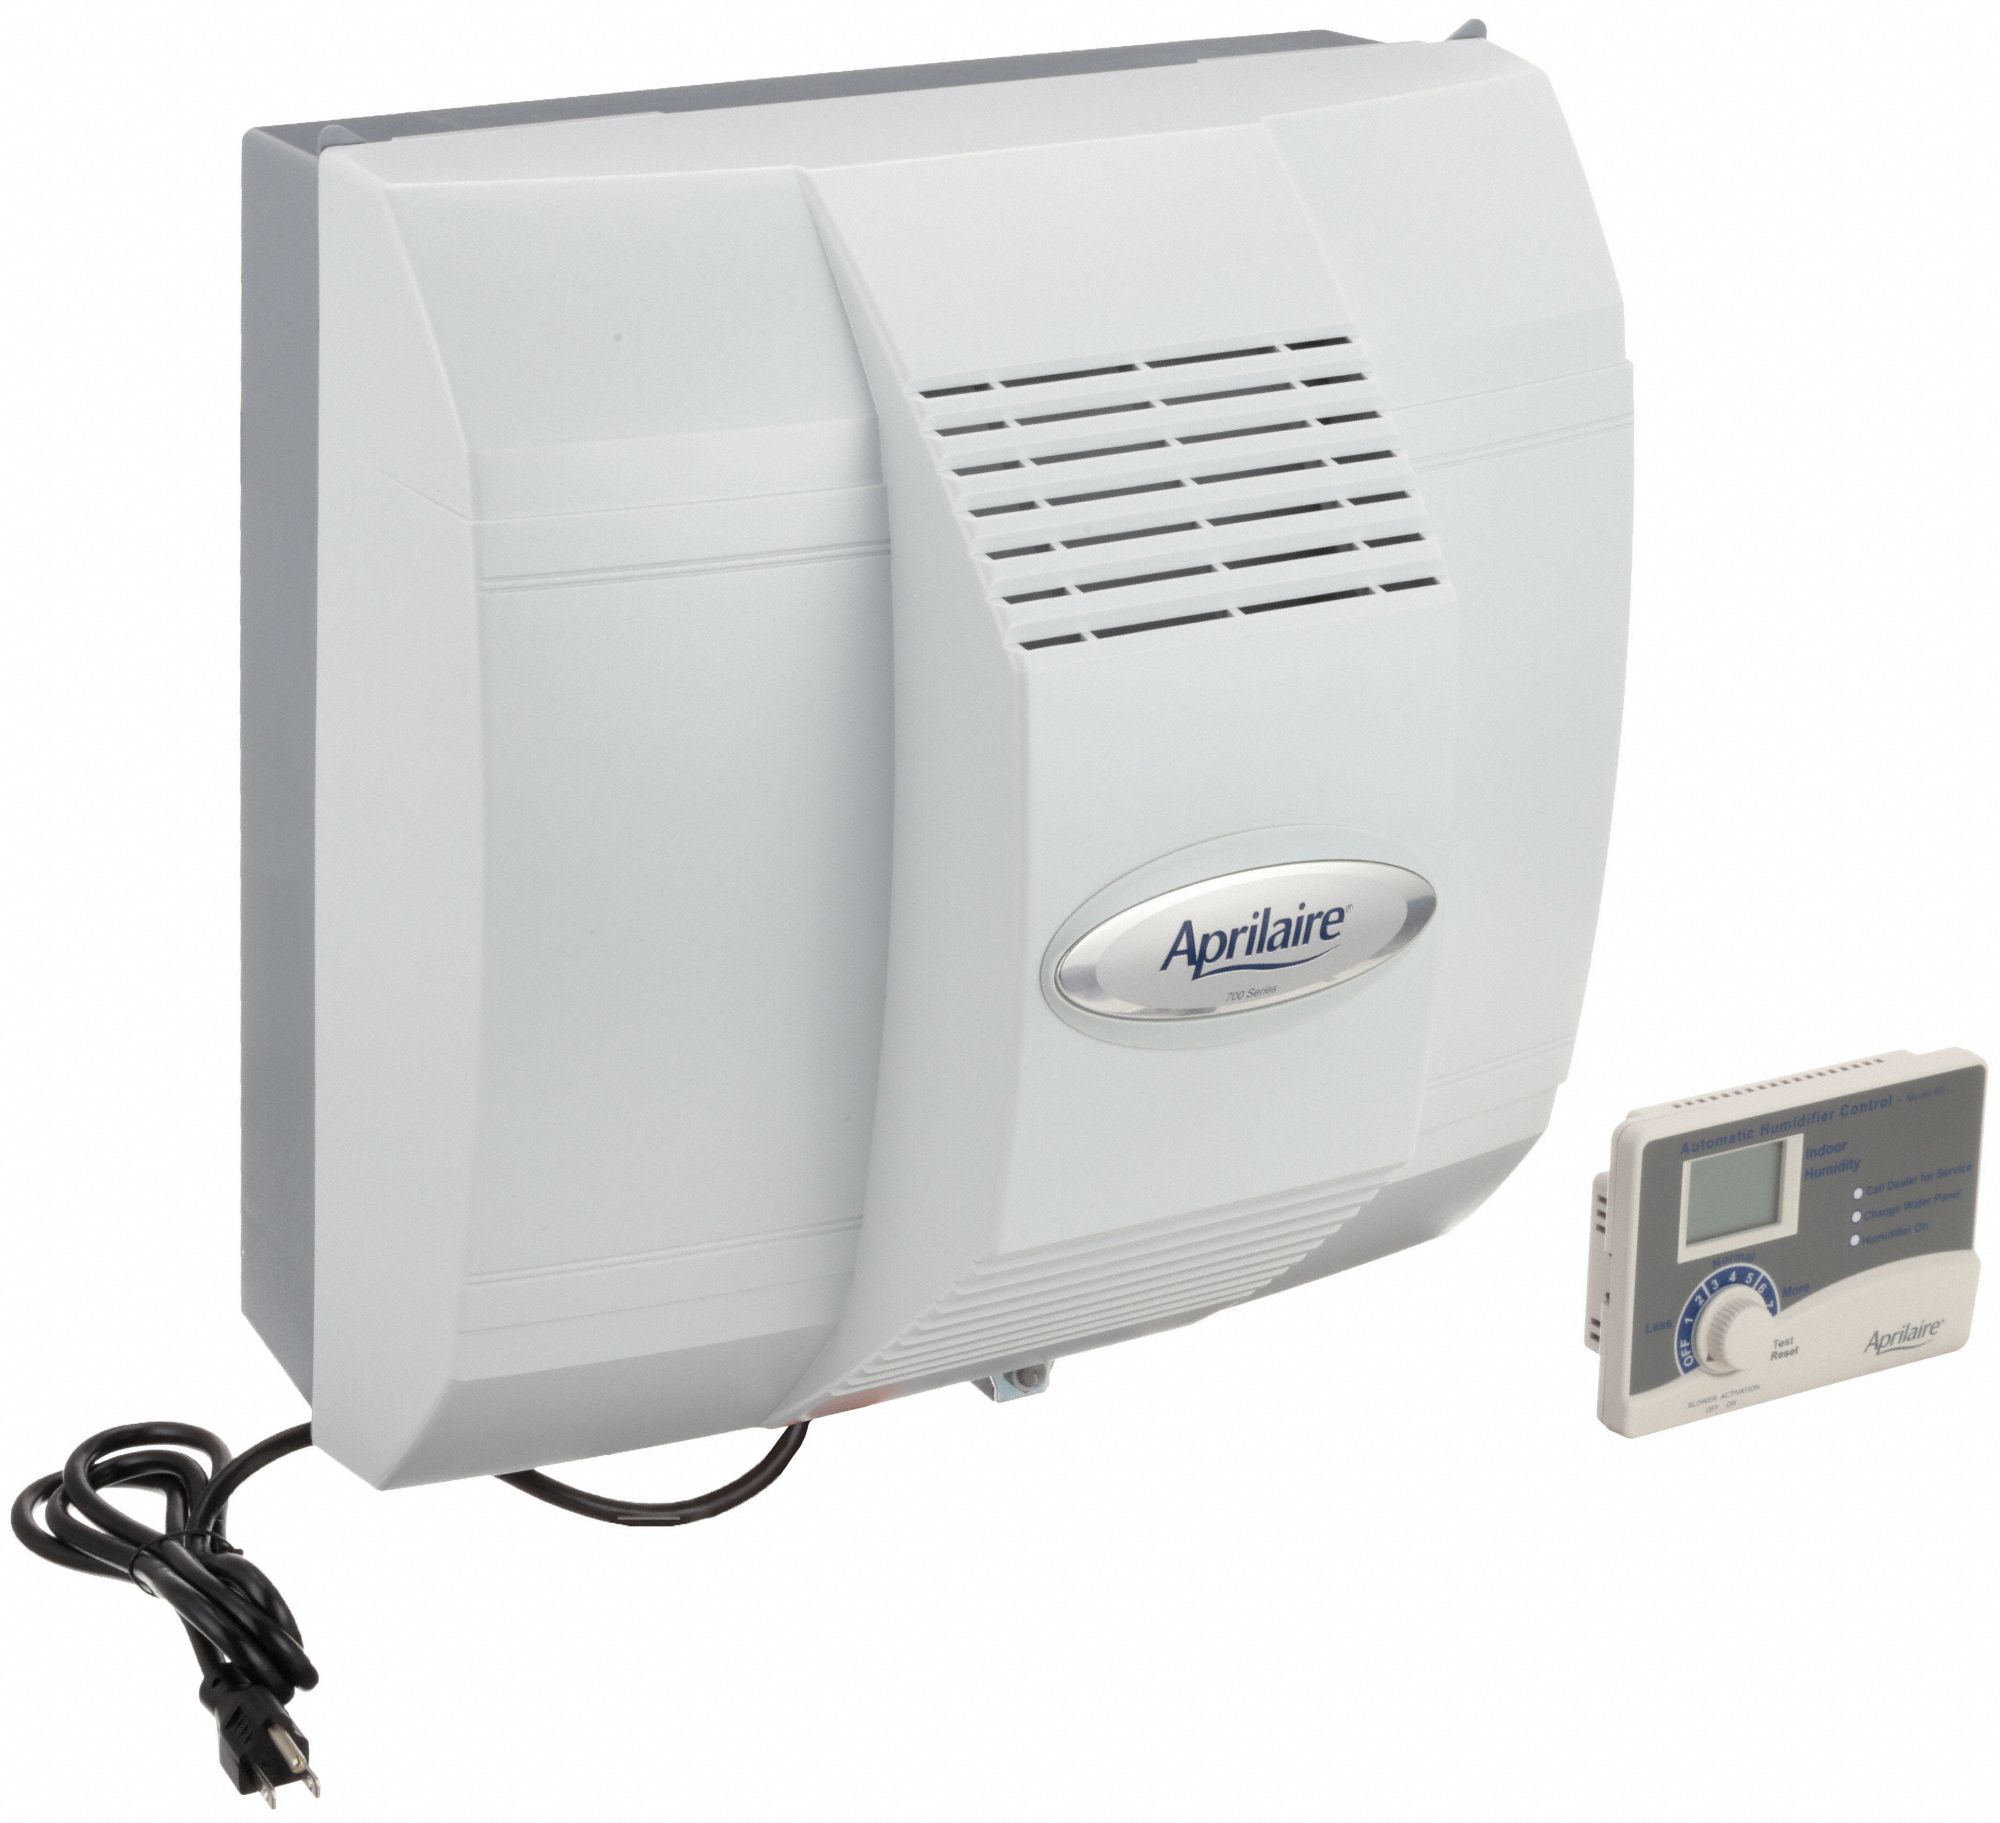 Aprilaire Model 700 High-Capacity Humidifier - Auto Digital Control